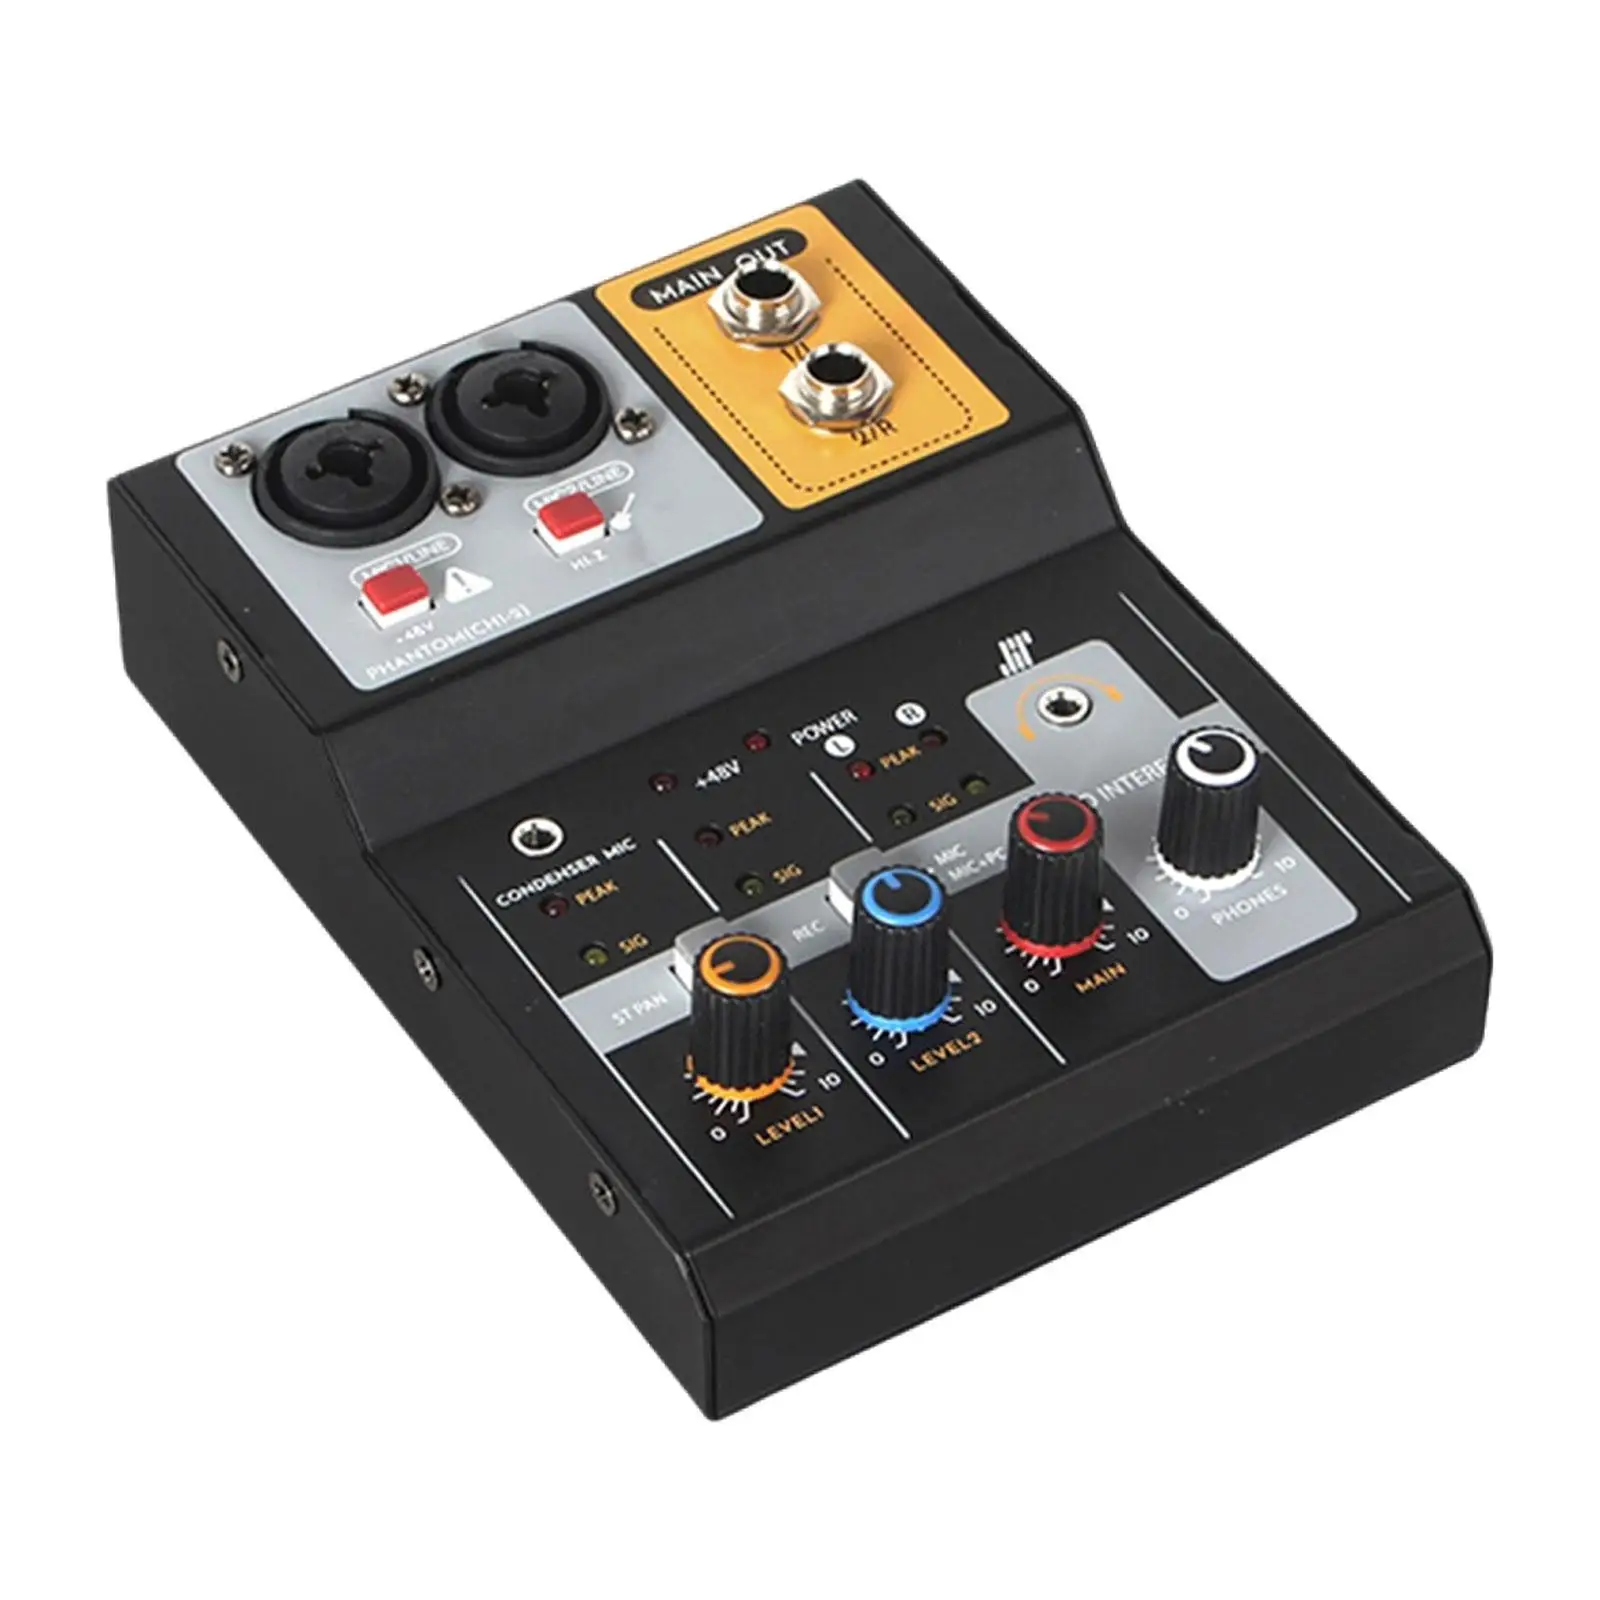 Mini Sound Board Console with 16 Bit 48KHz Audio Resolution Portable Audio Mixer for Studio Show Live Broadcast Music Recording